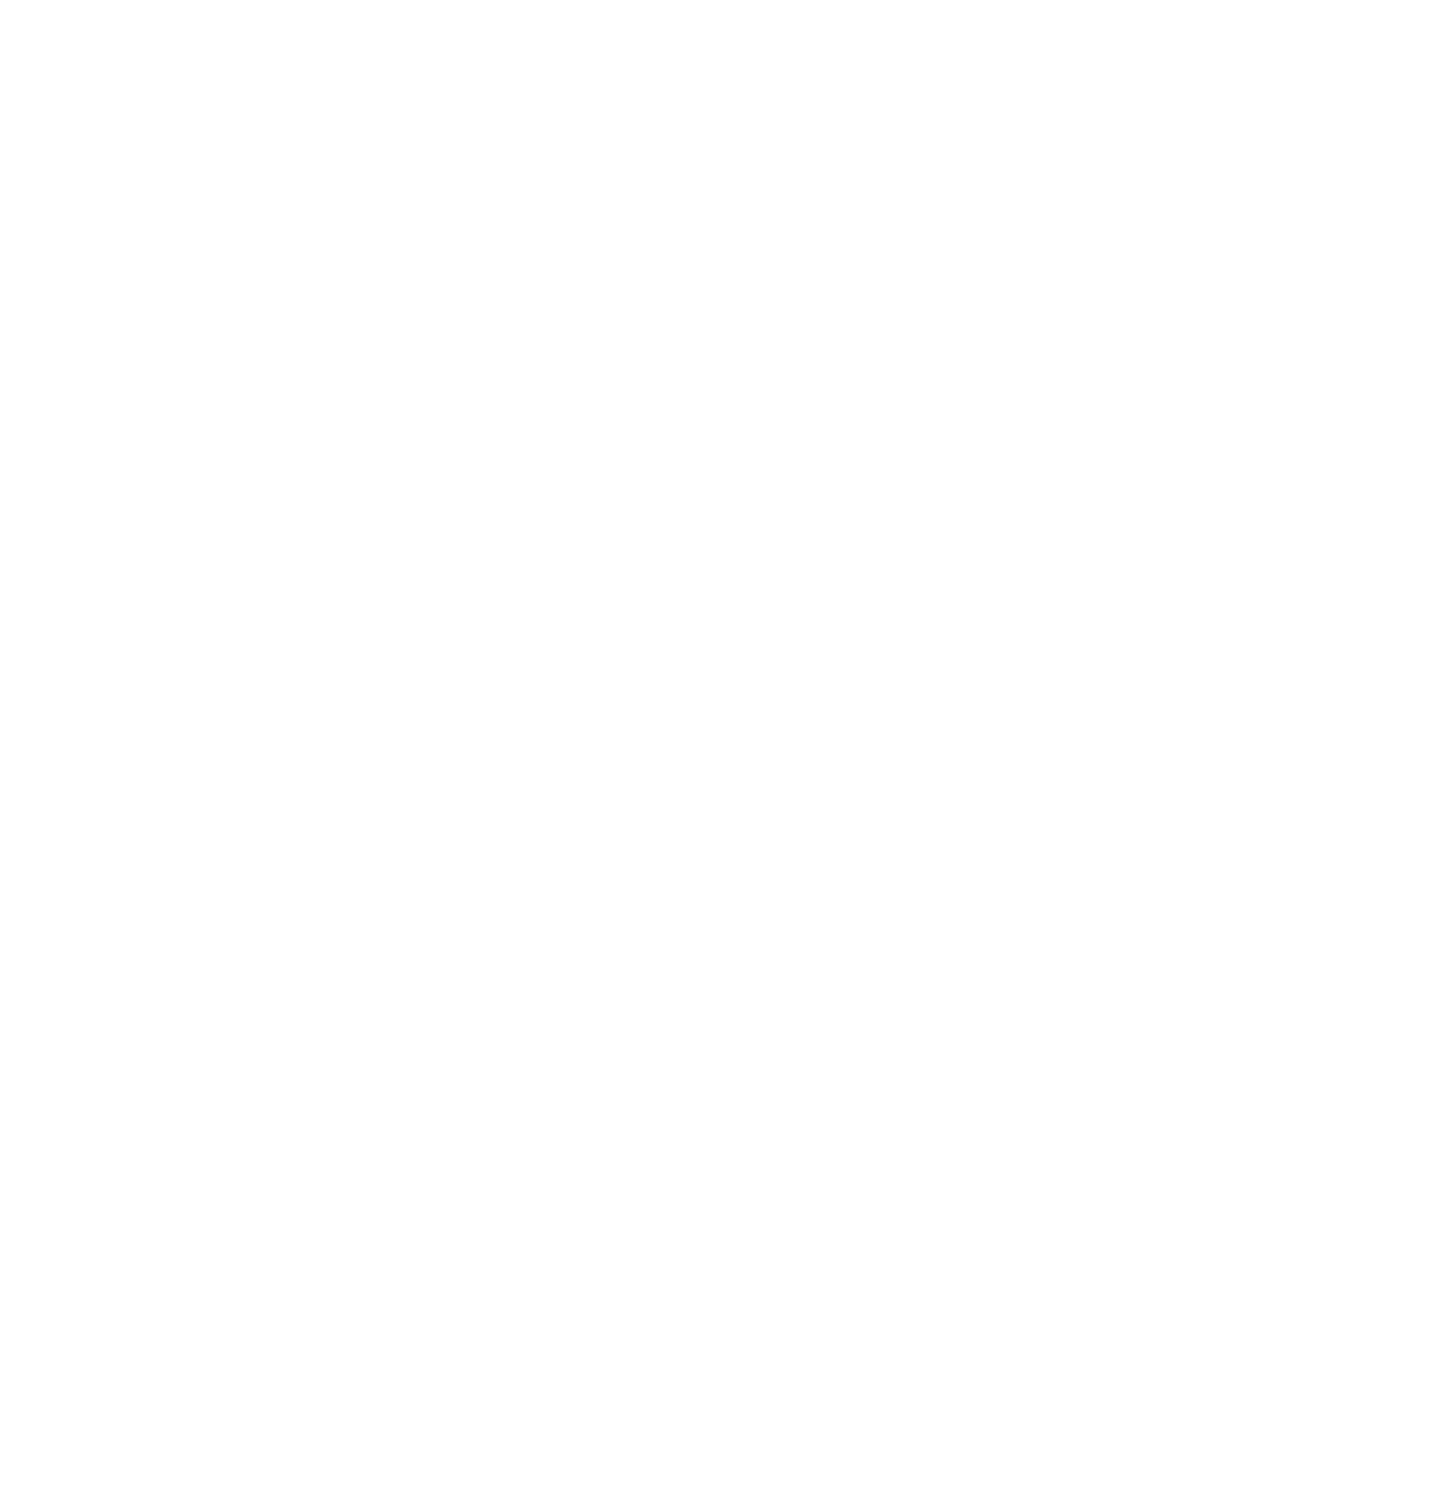 Kikkoman logo pour fonds sombres (PNG transparent)